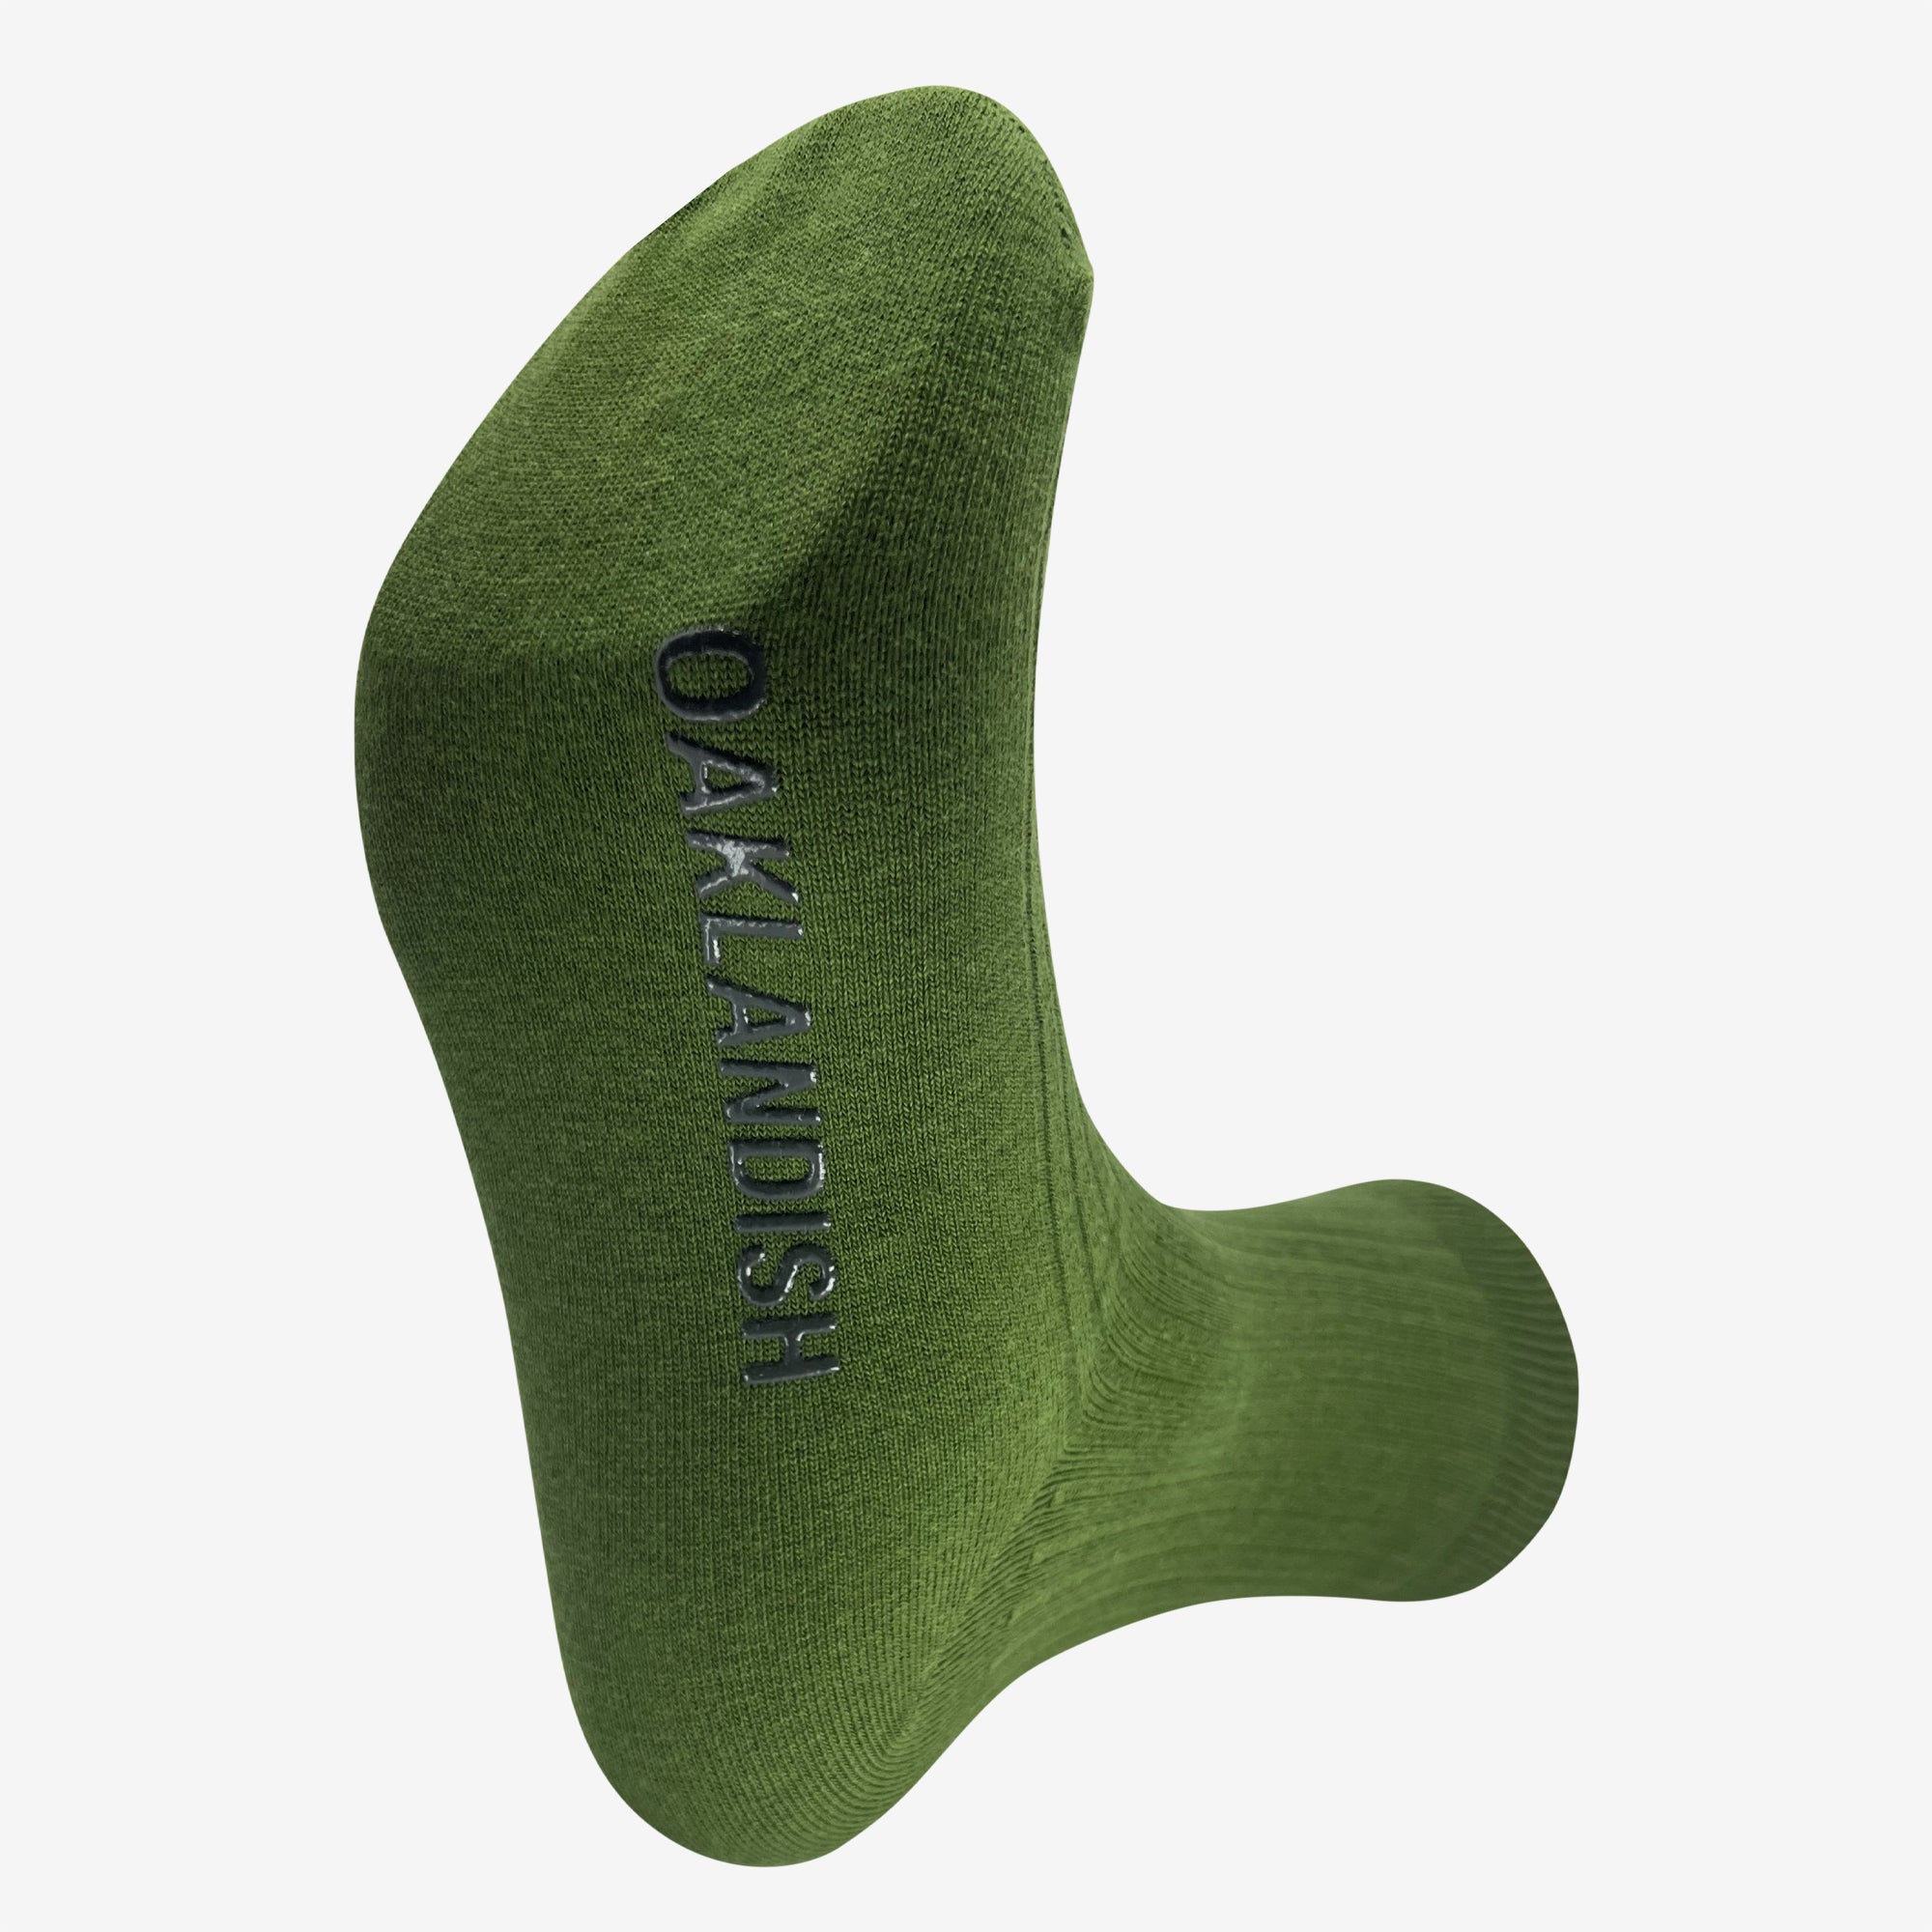 Single green men's crew socks. Bottom view with black Oaklandish wordmark on sole.